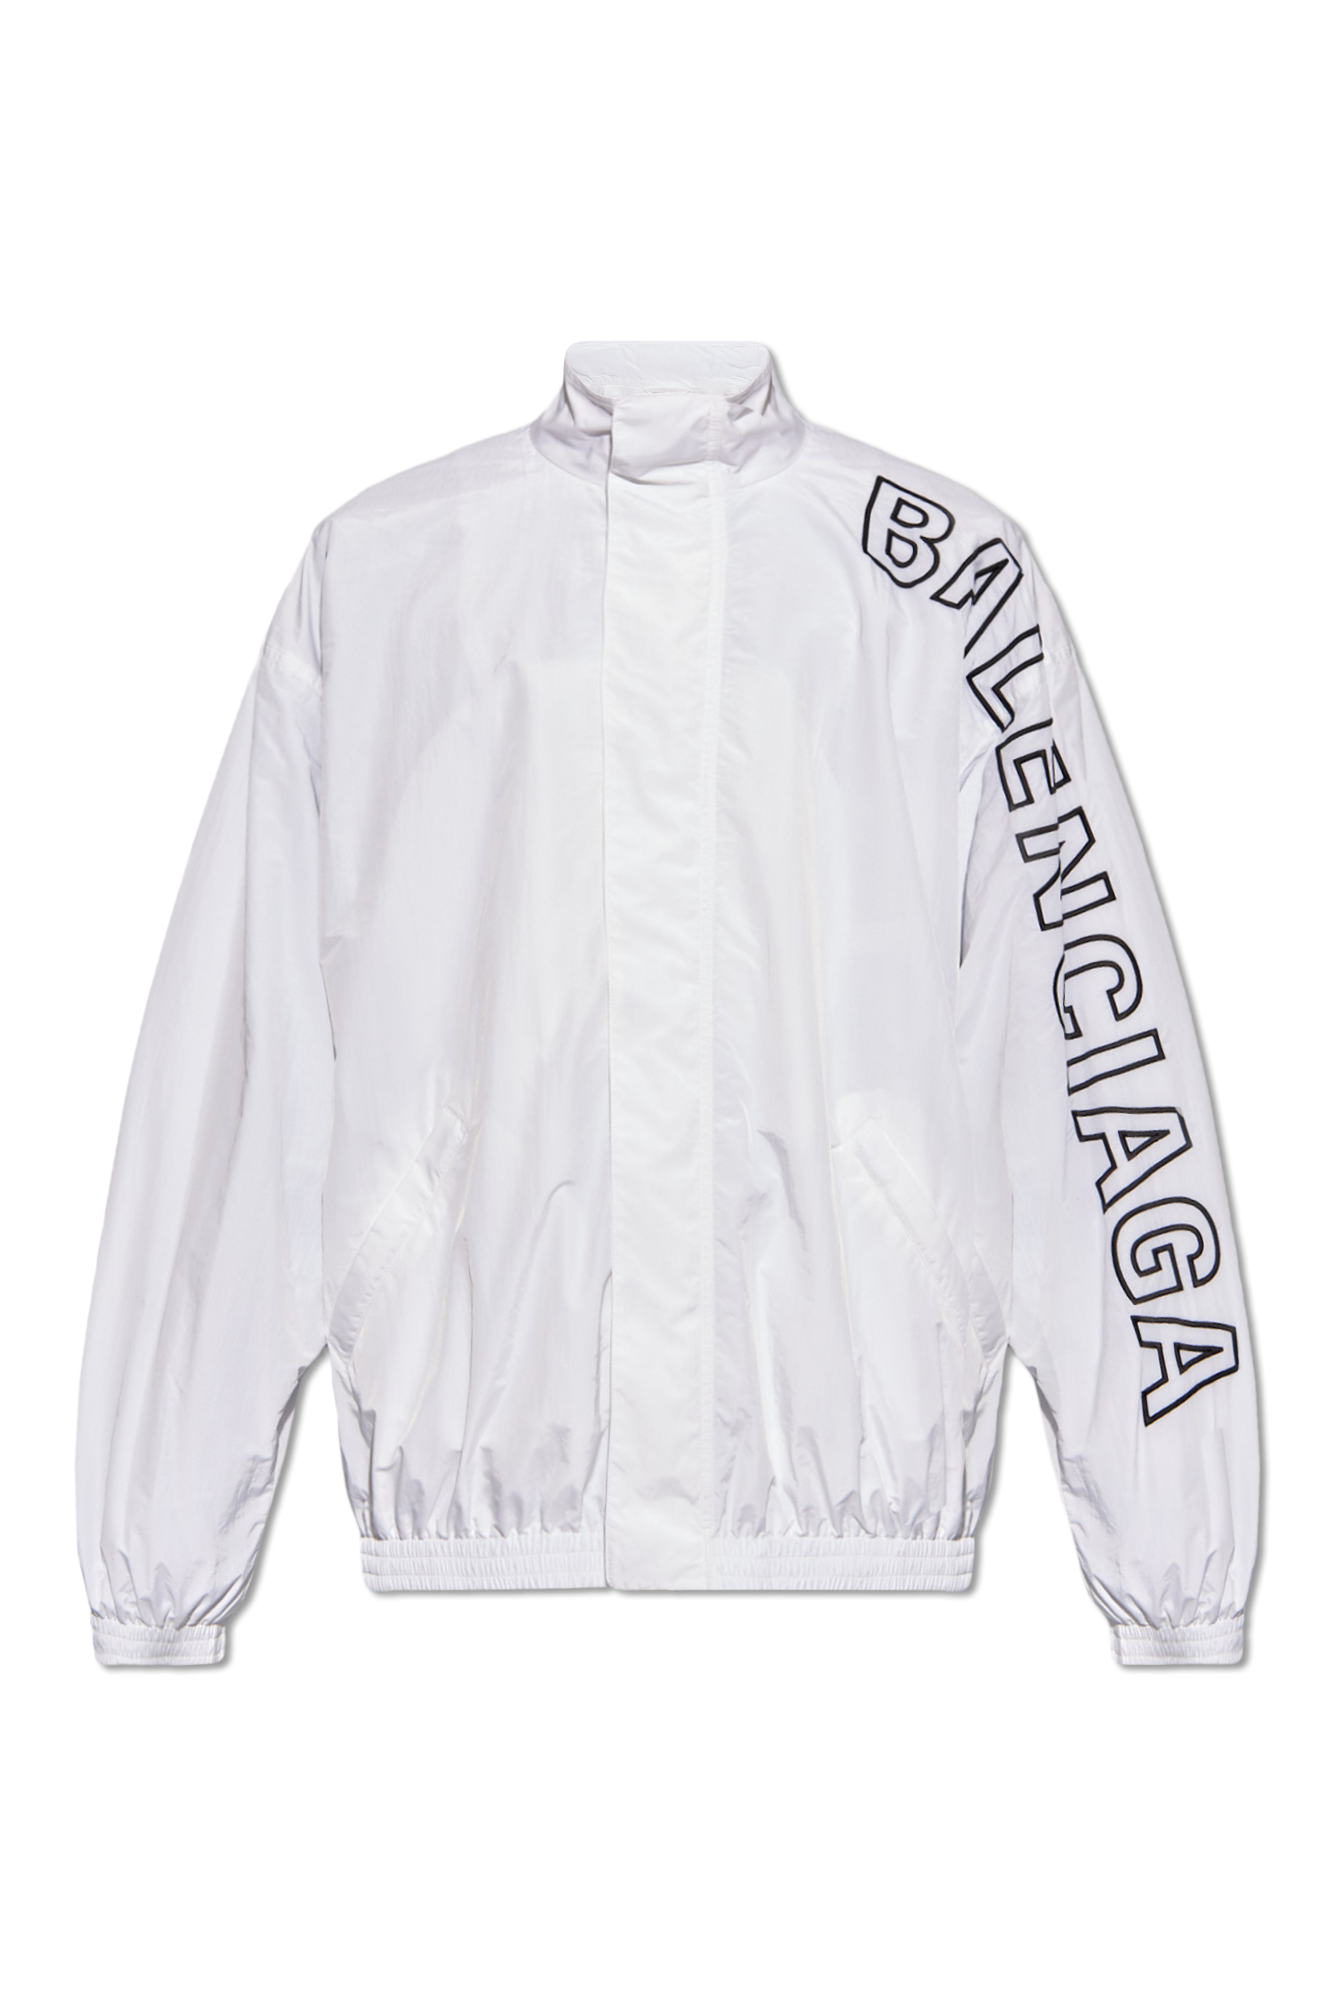 White Jacket with logo Balenciaga - Vitkac Italy